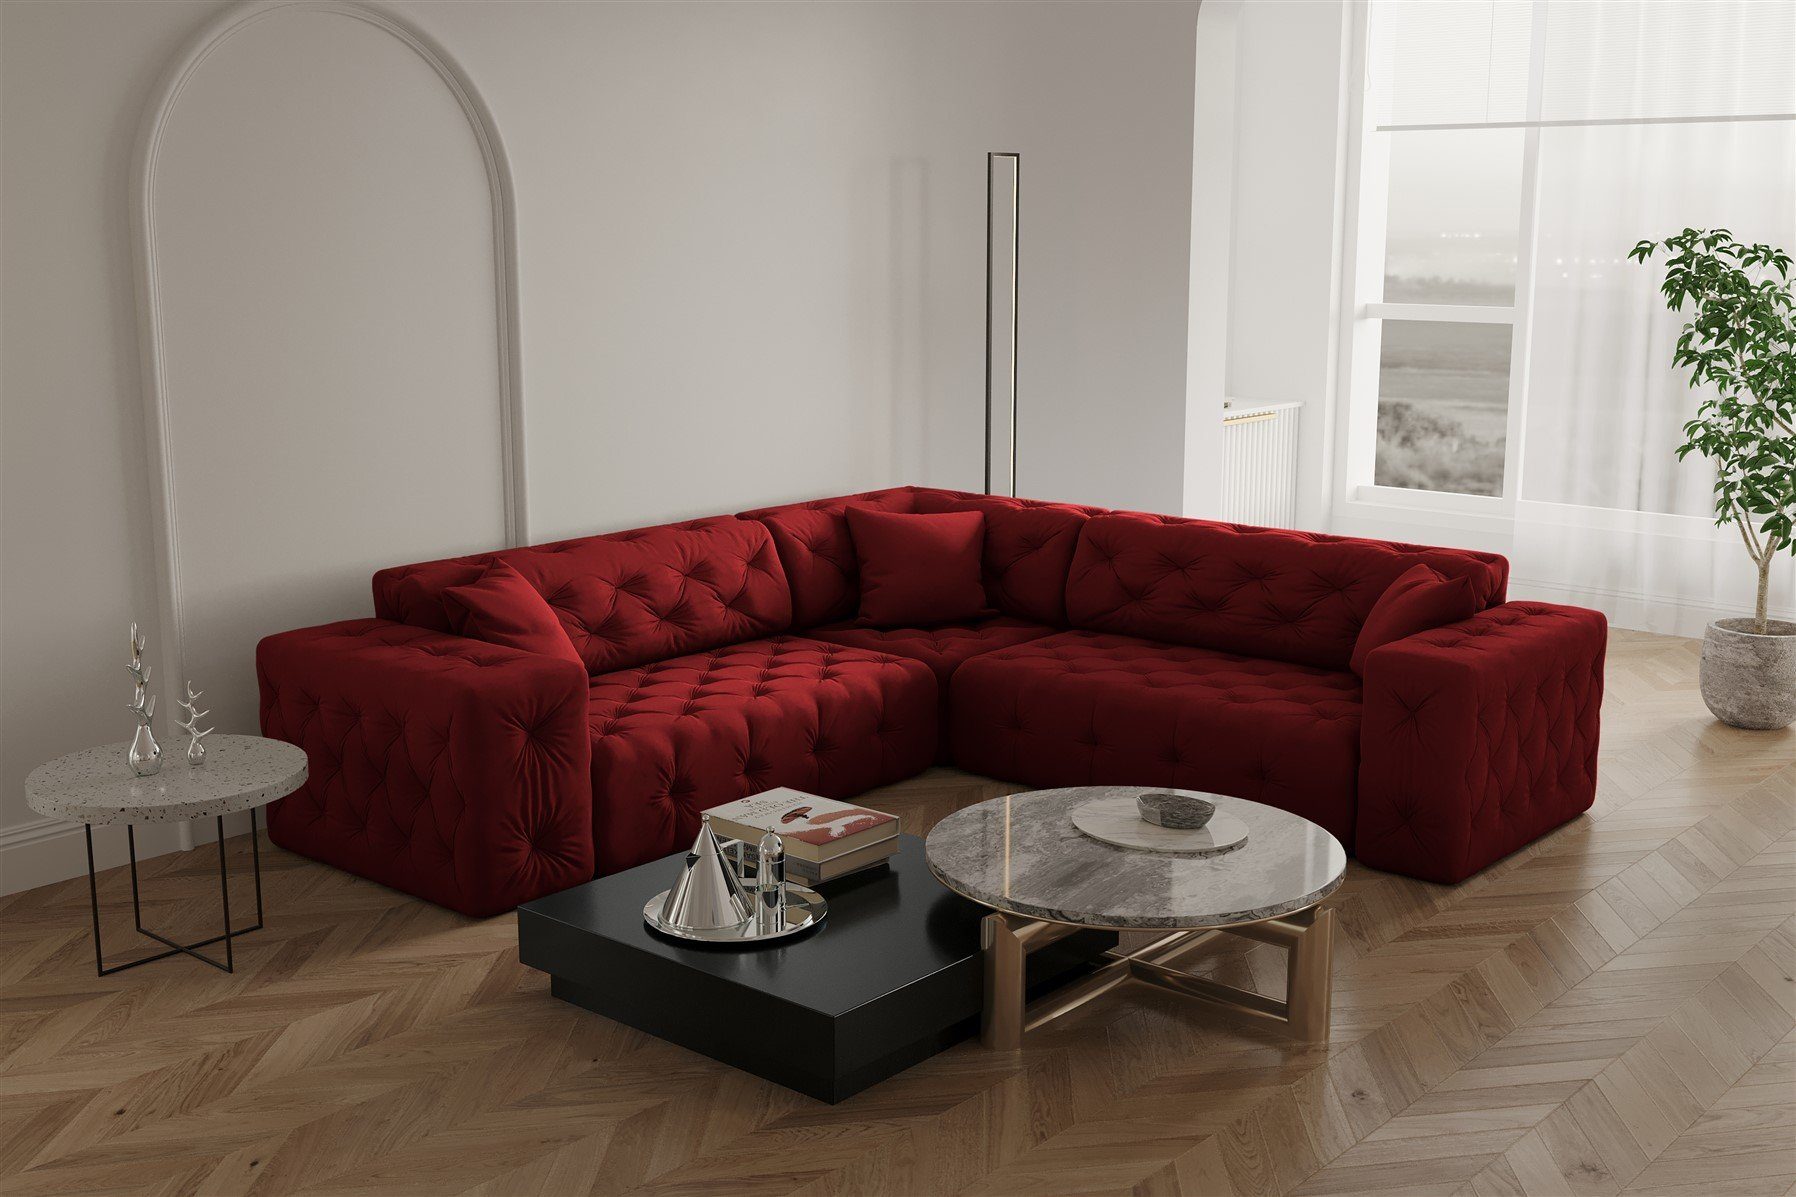 Rote Sofas online kaufen » Rote Couches | OTTO